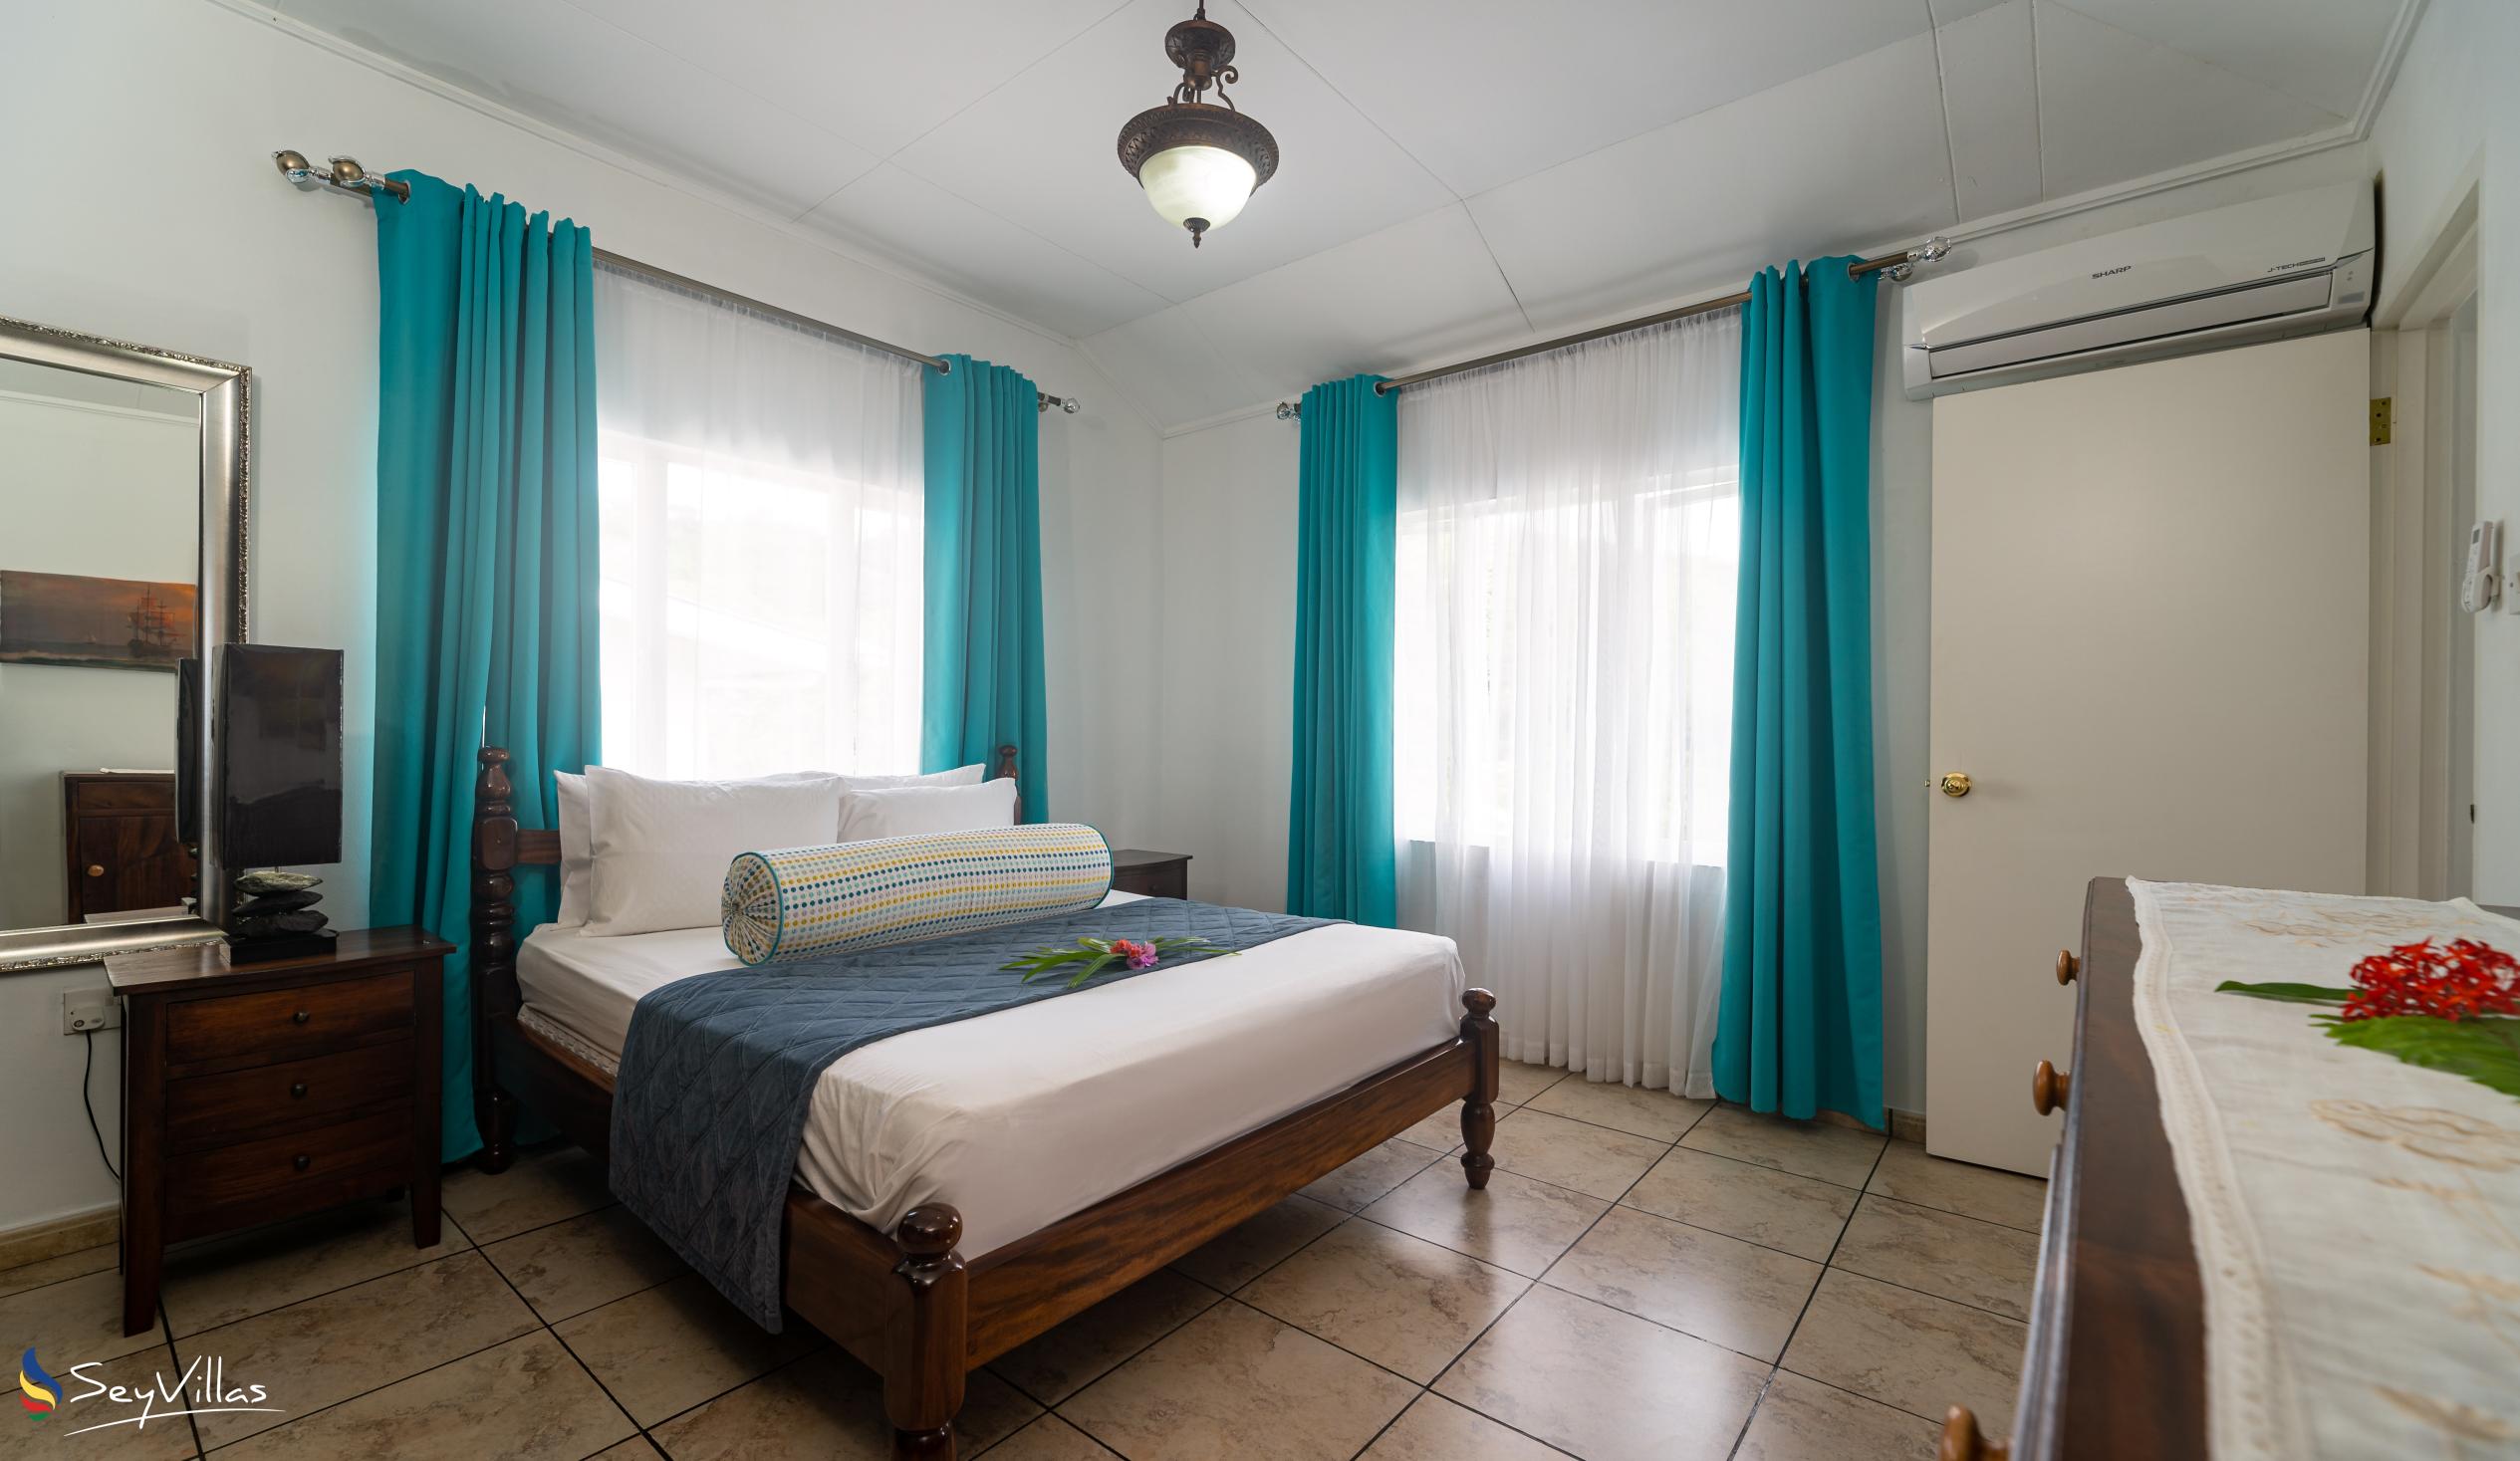 Photo 117: Stephna Residence - 2-Bedroom Villa - Mahé (Seychelles)